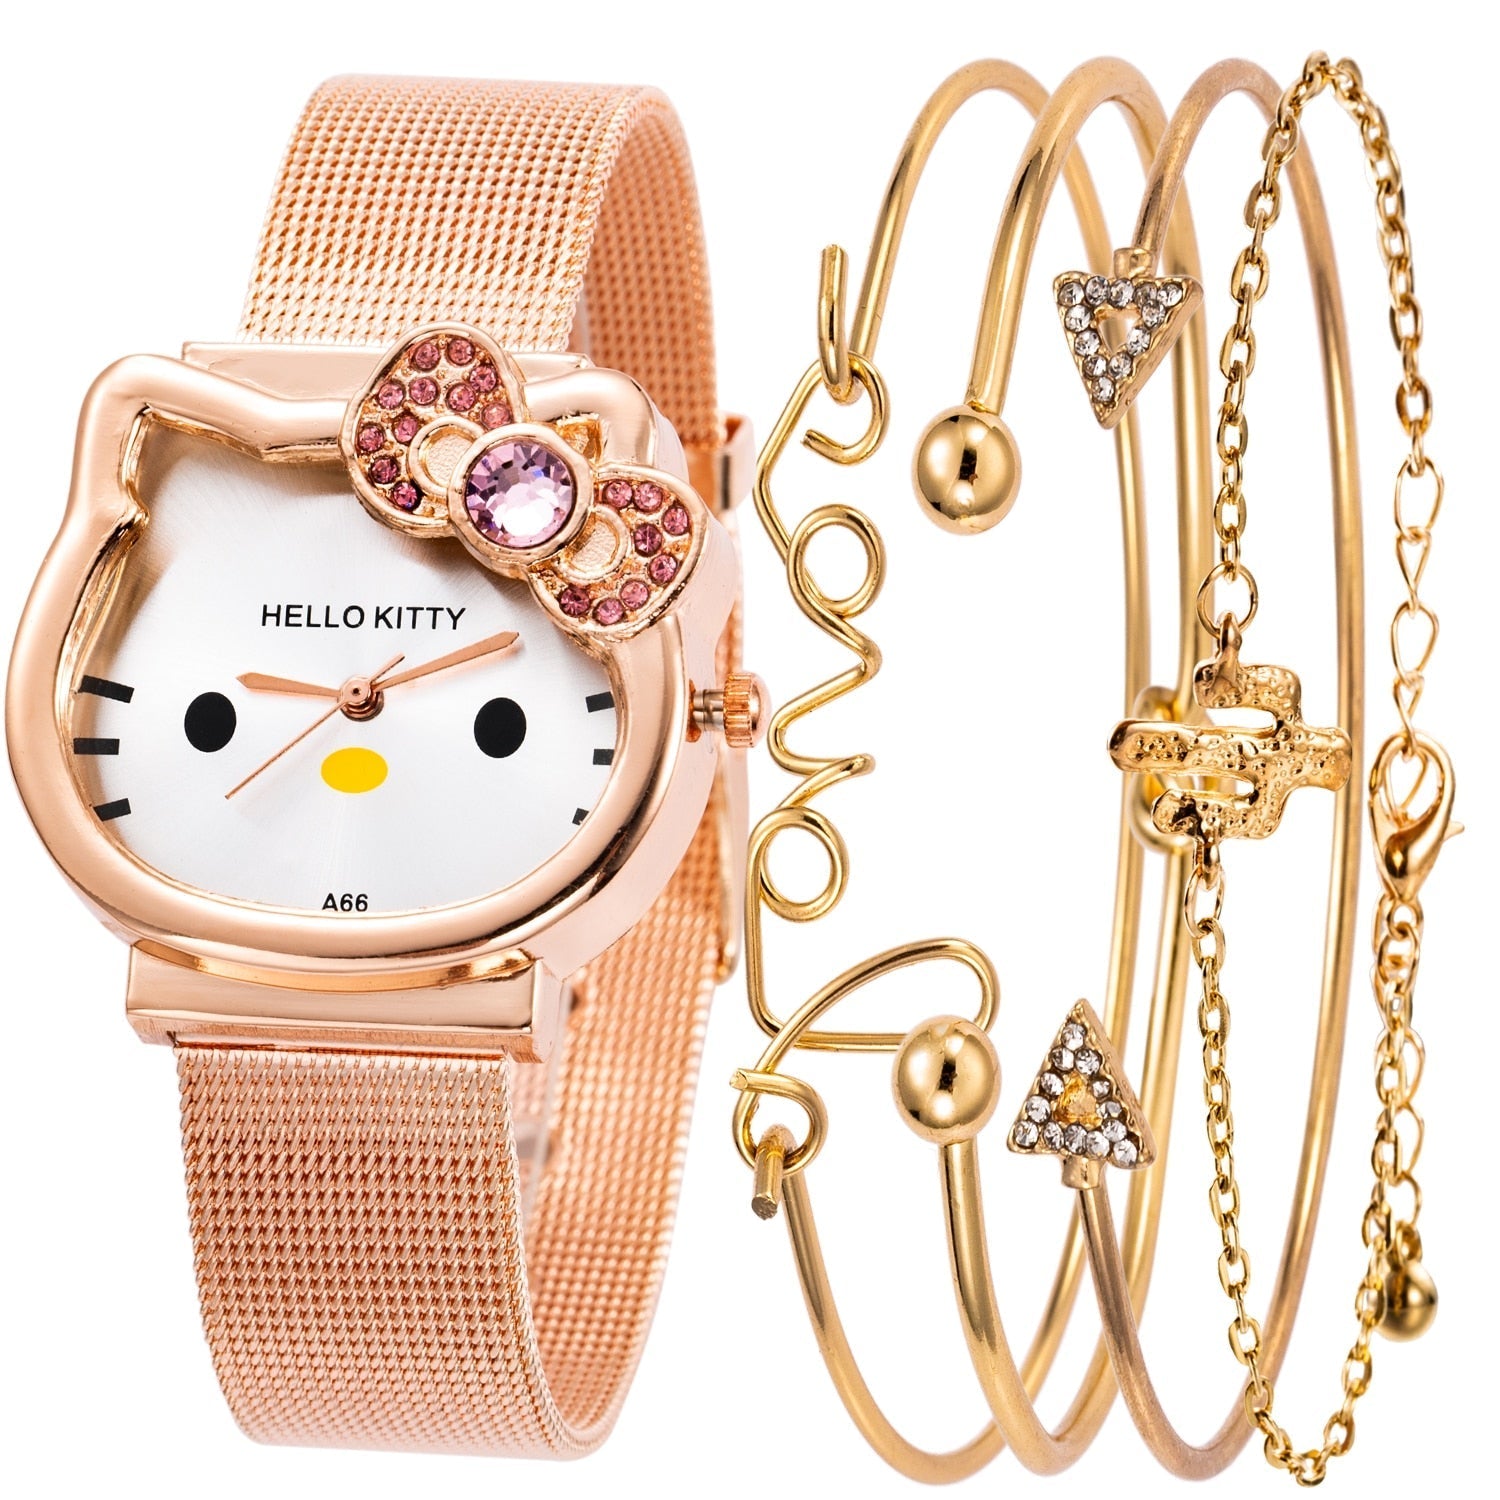 Shop Hello Kitty Watch at best price | GoshopperQa.com |  9abe36658bff8131d5a0923ebc196d0e